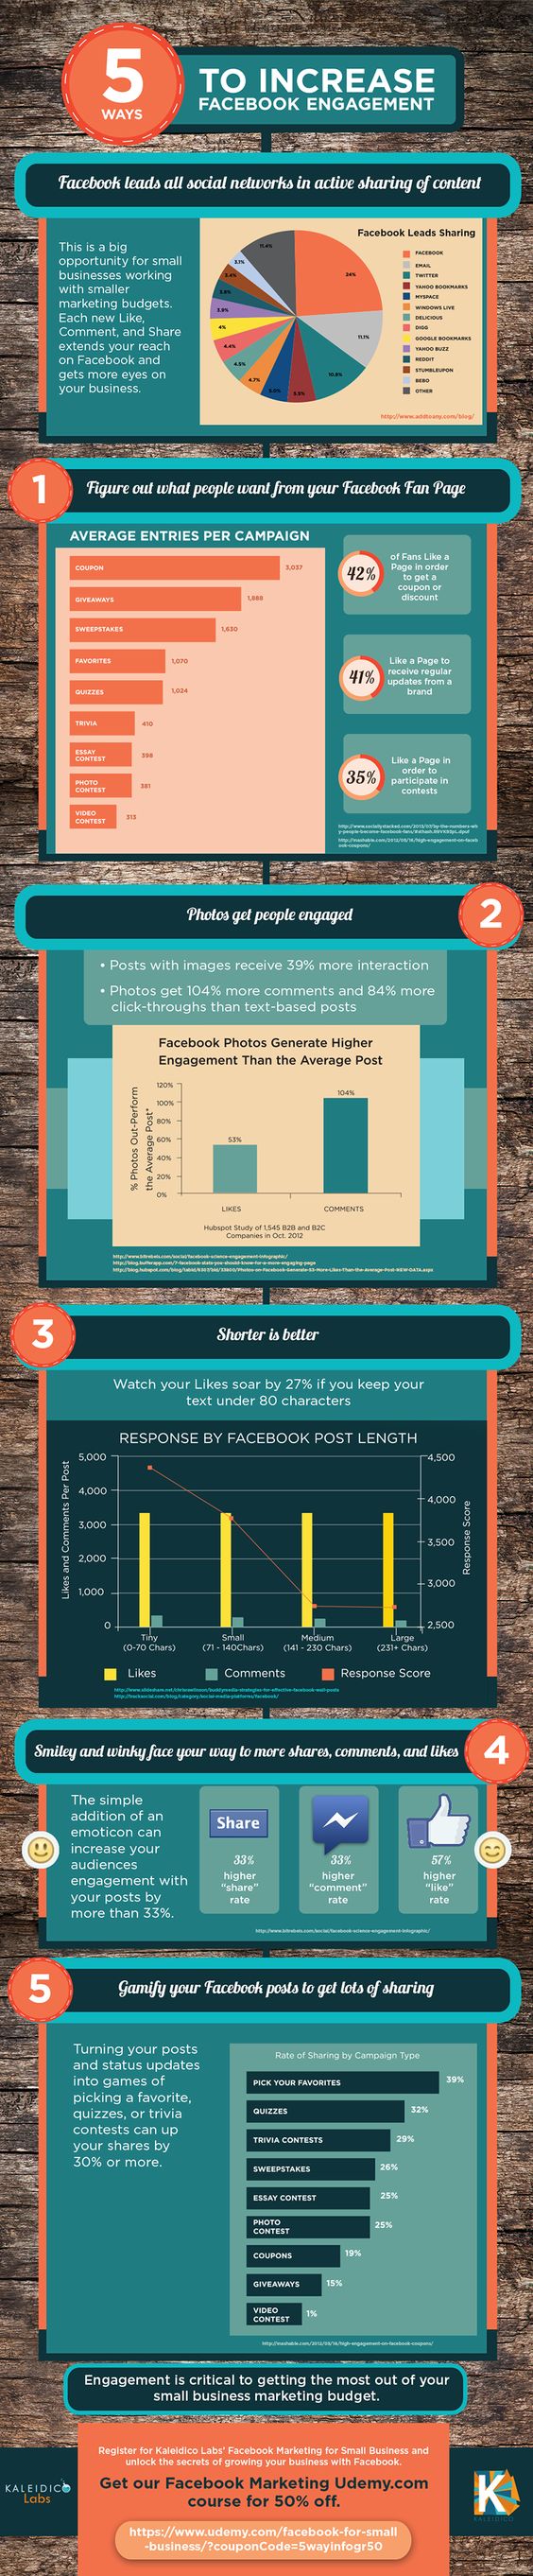 5 Tips to increase Facebook Engagement #socialmedia